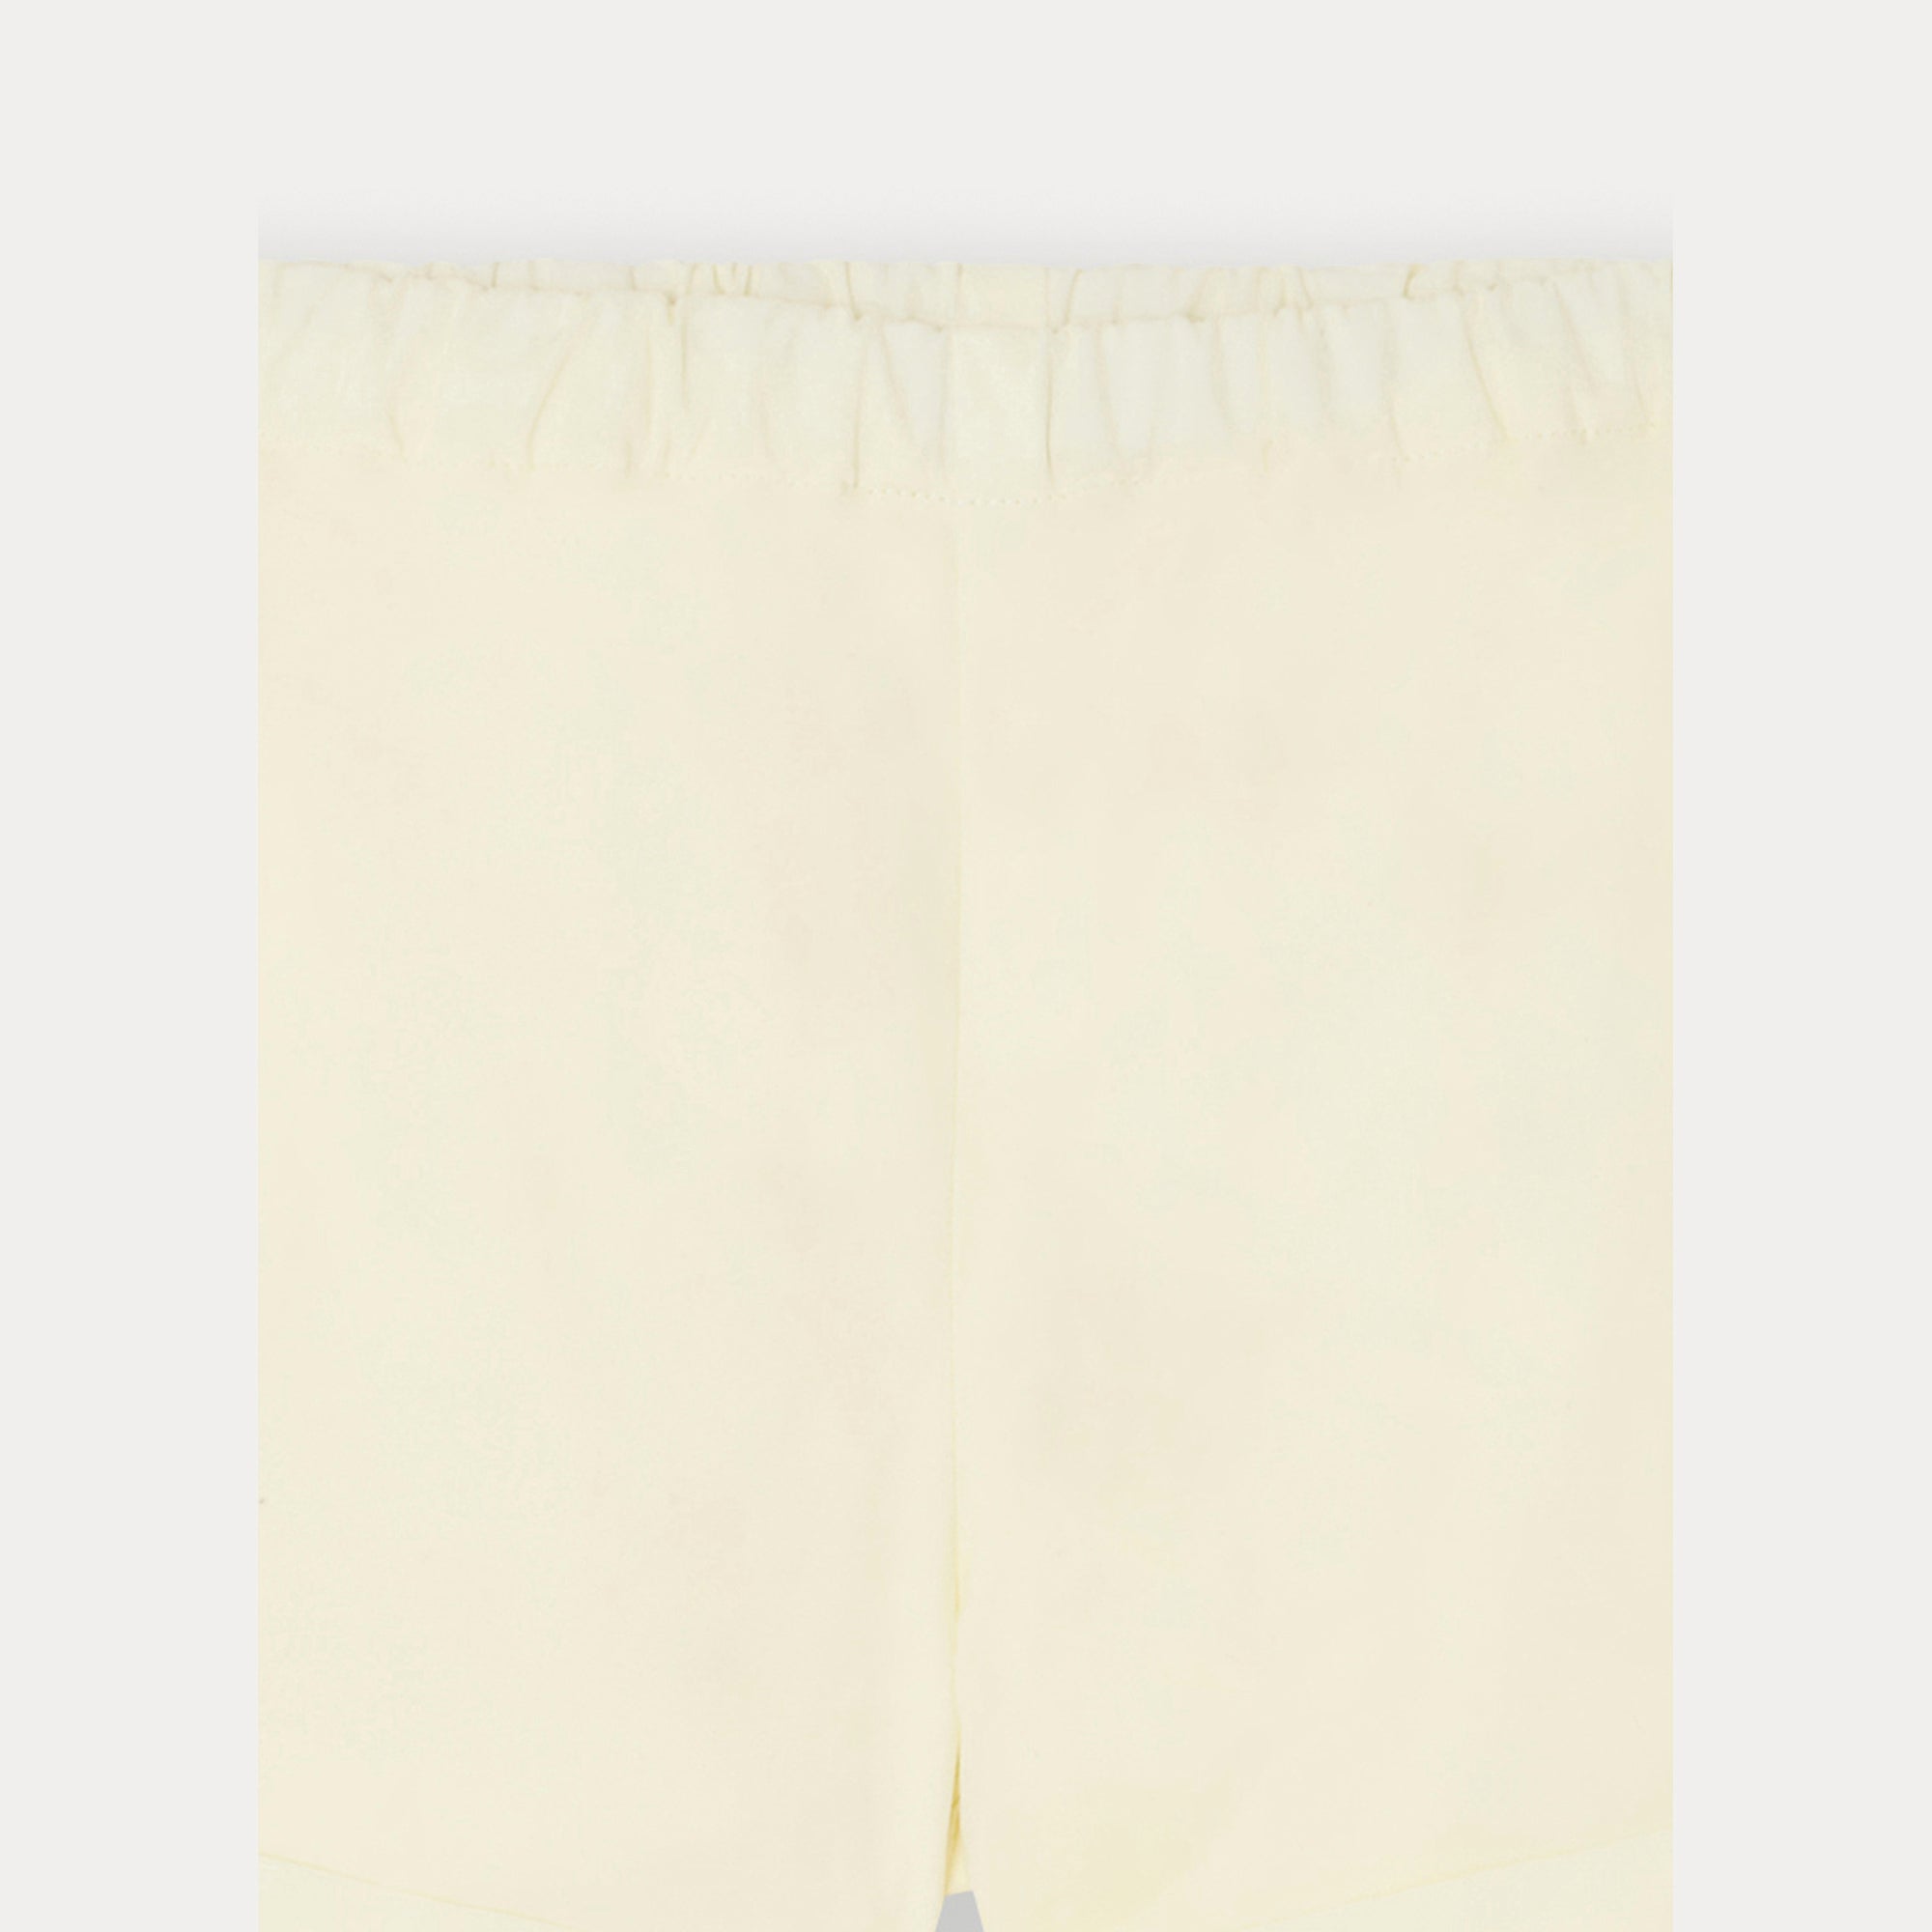 Baby Girls Light Yellow Cotton Shorts